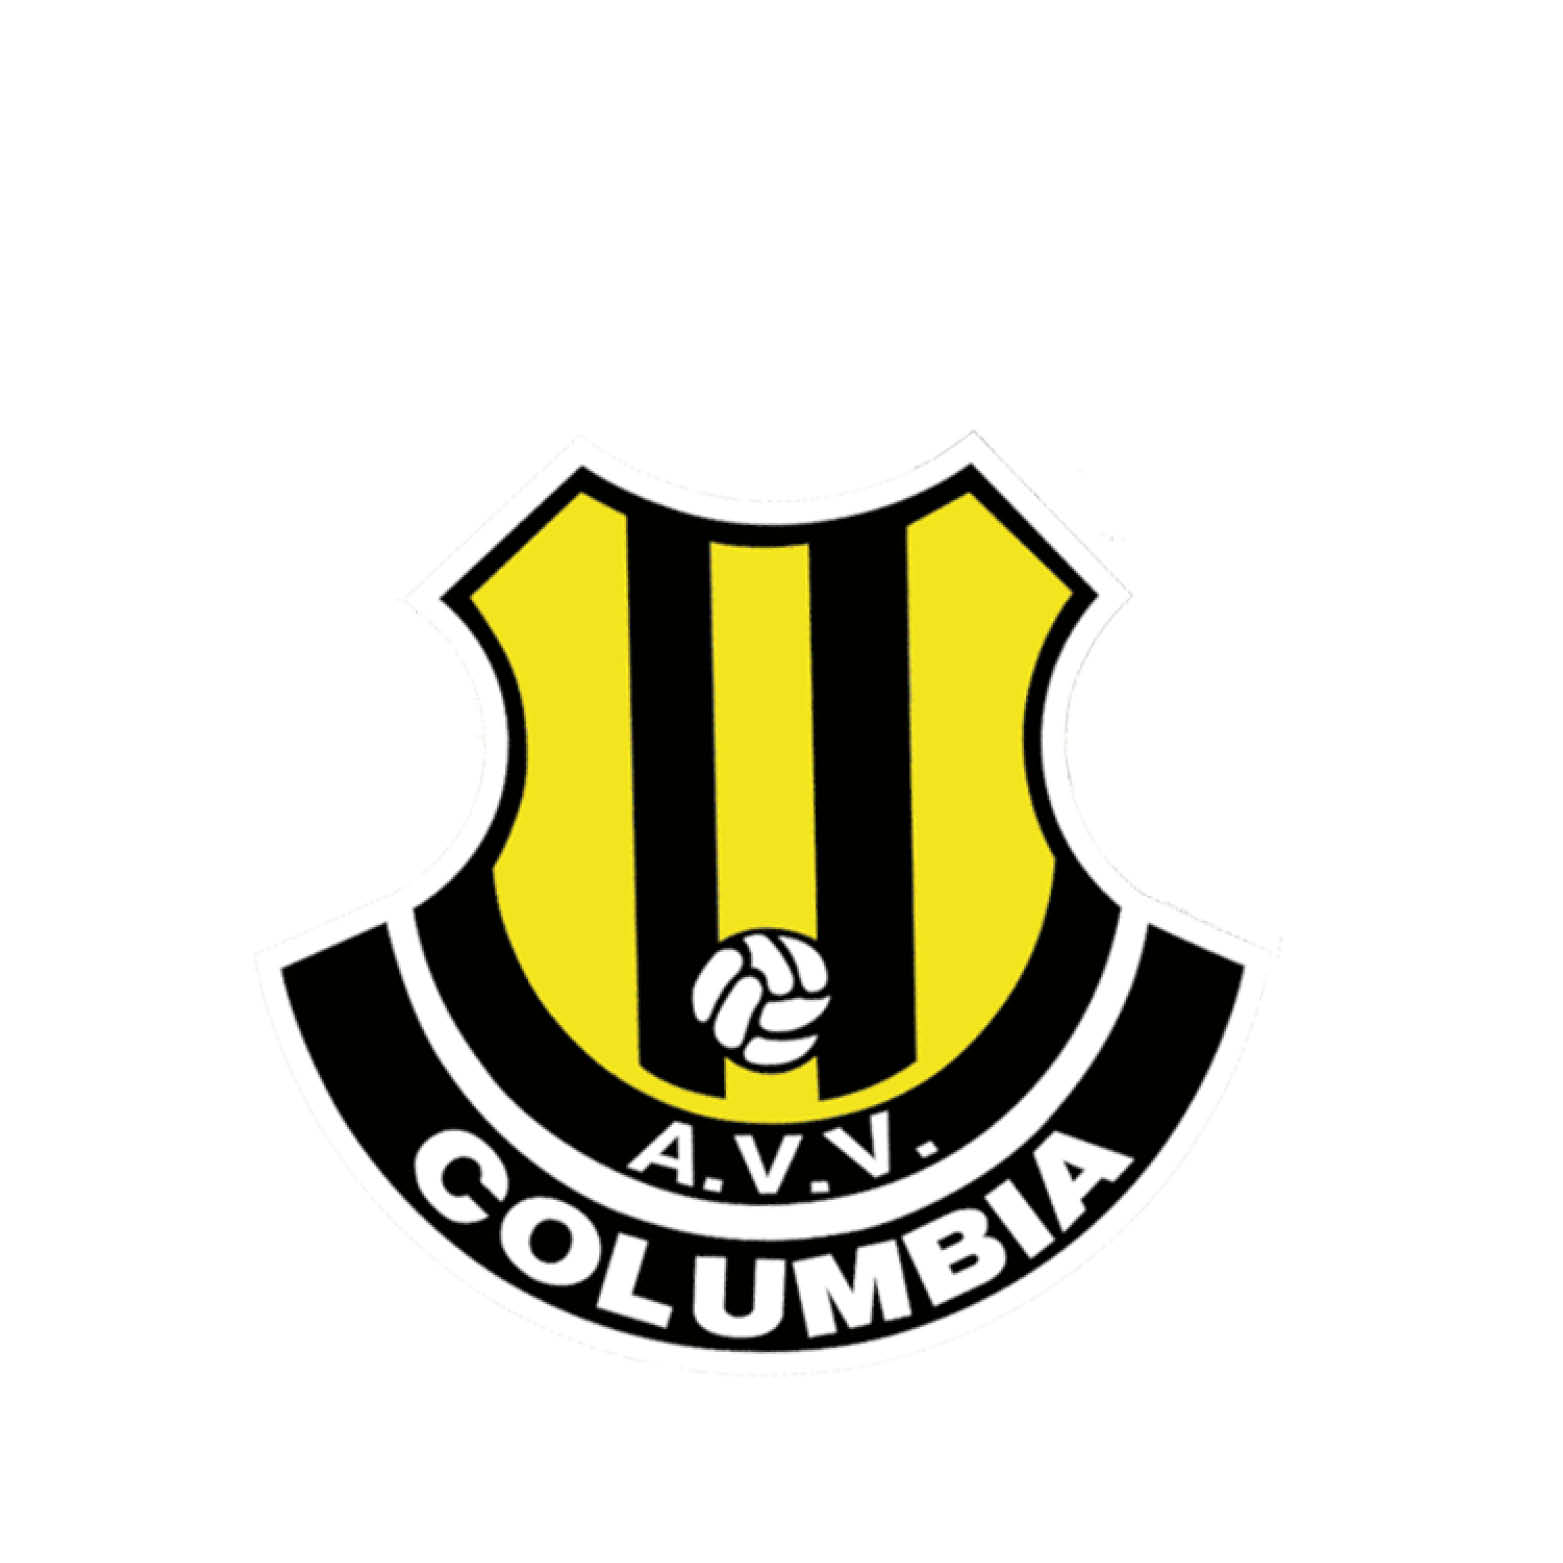 logo van voetbalvereniging AVV Columbia